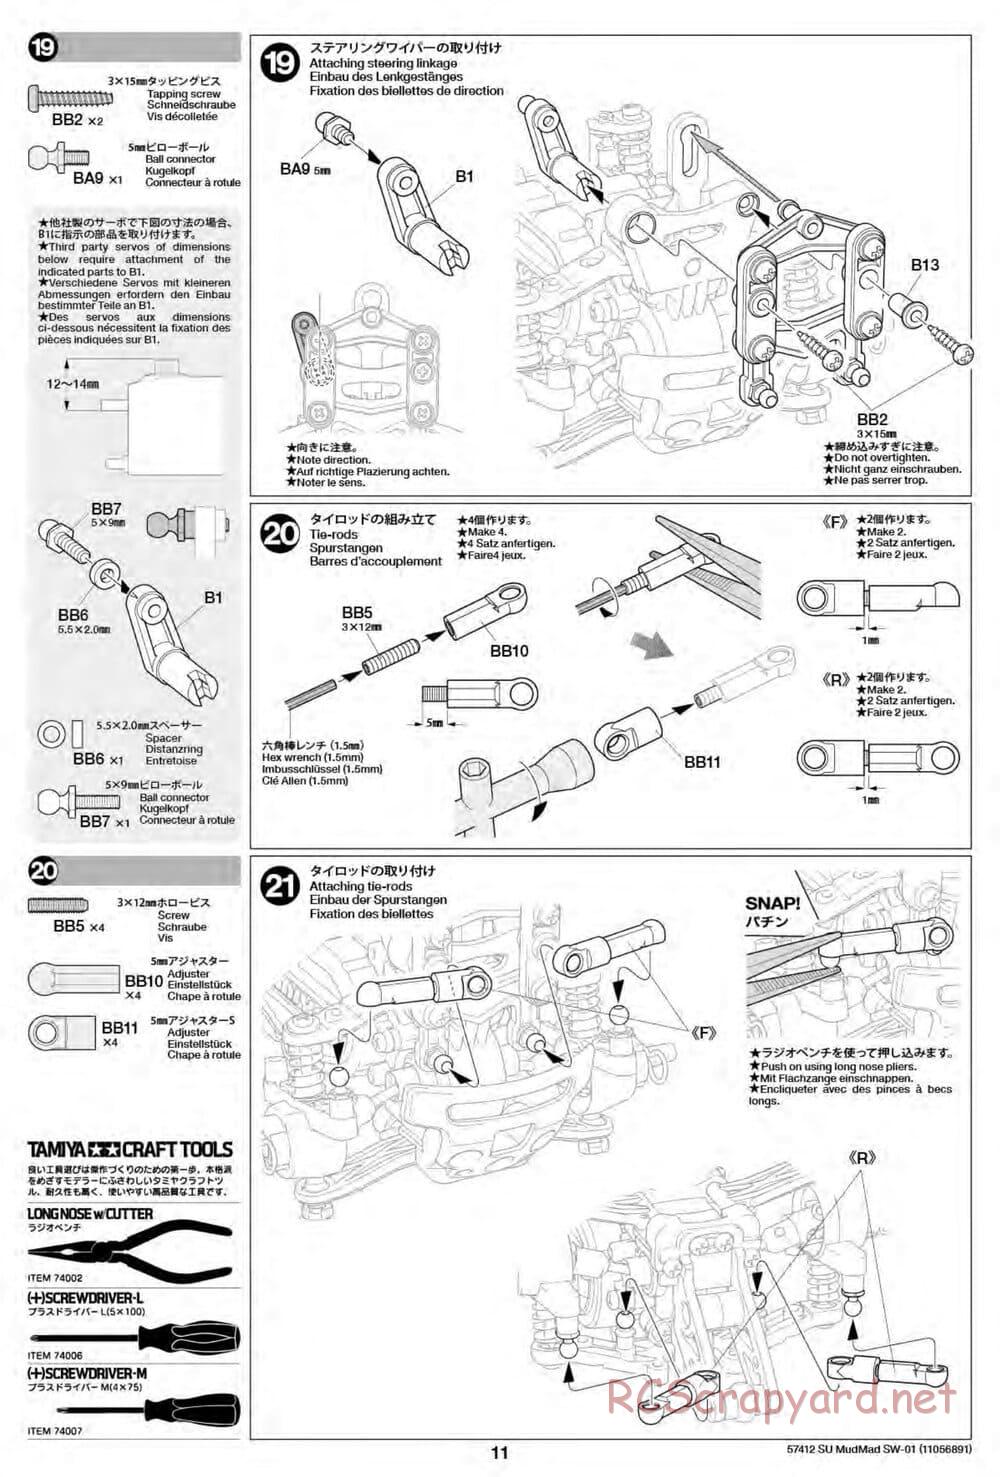 Tamiya - MudMad - SW-01 Chassis - Manual - Page 11